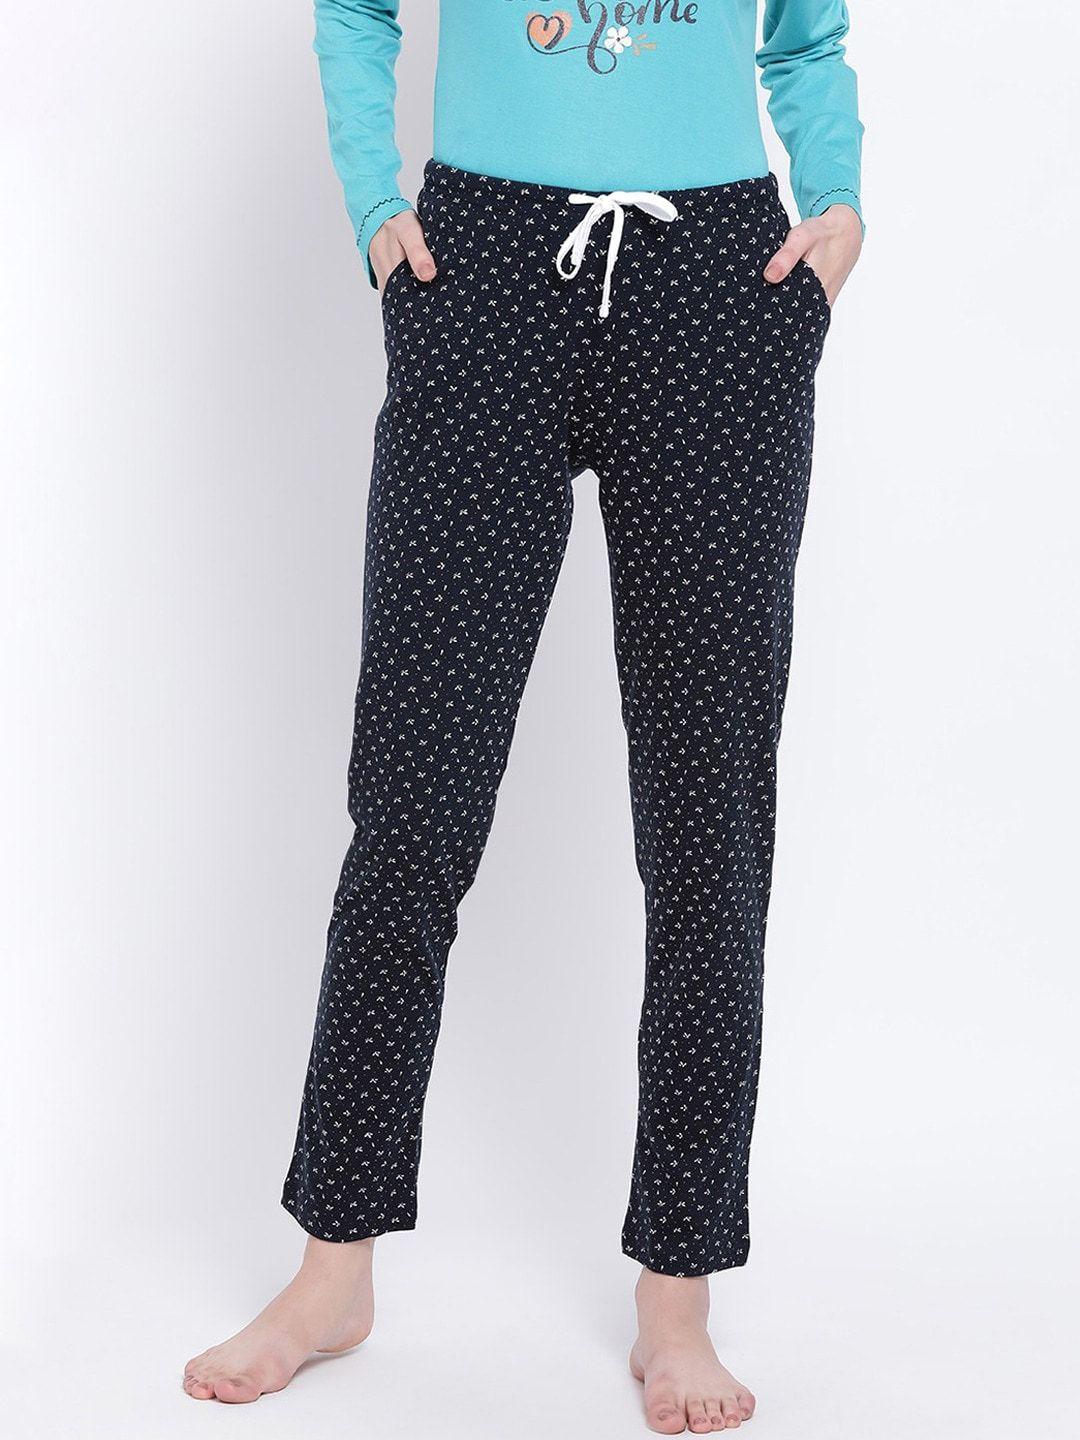 kanvin women navy blue & white printed cotton pyjamas